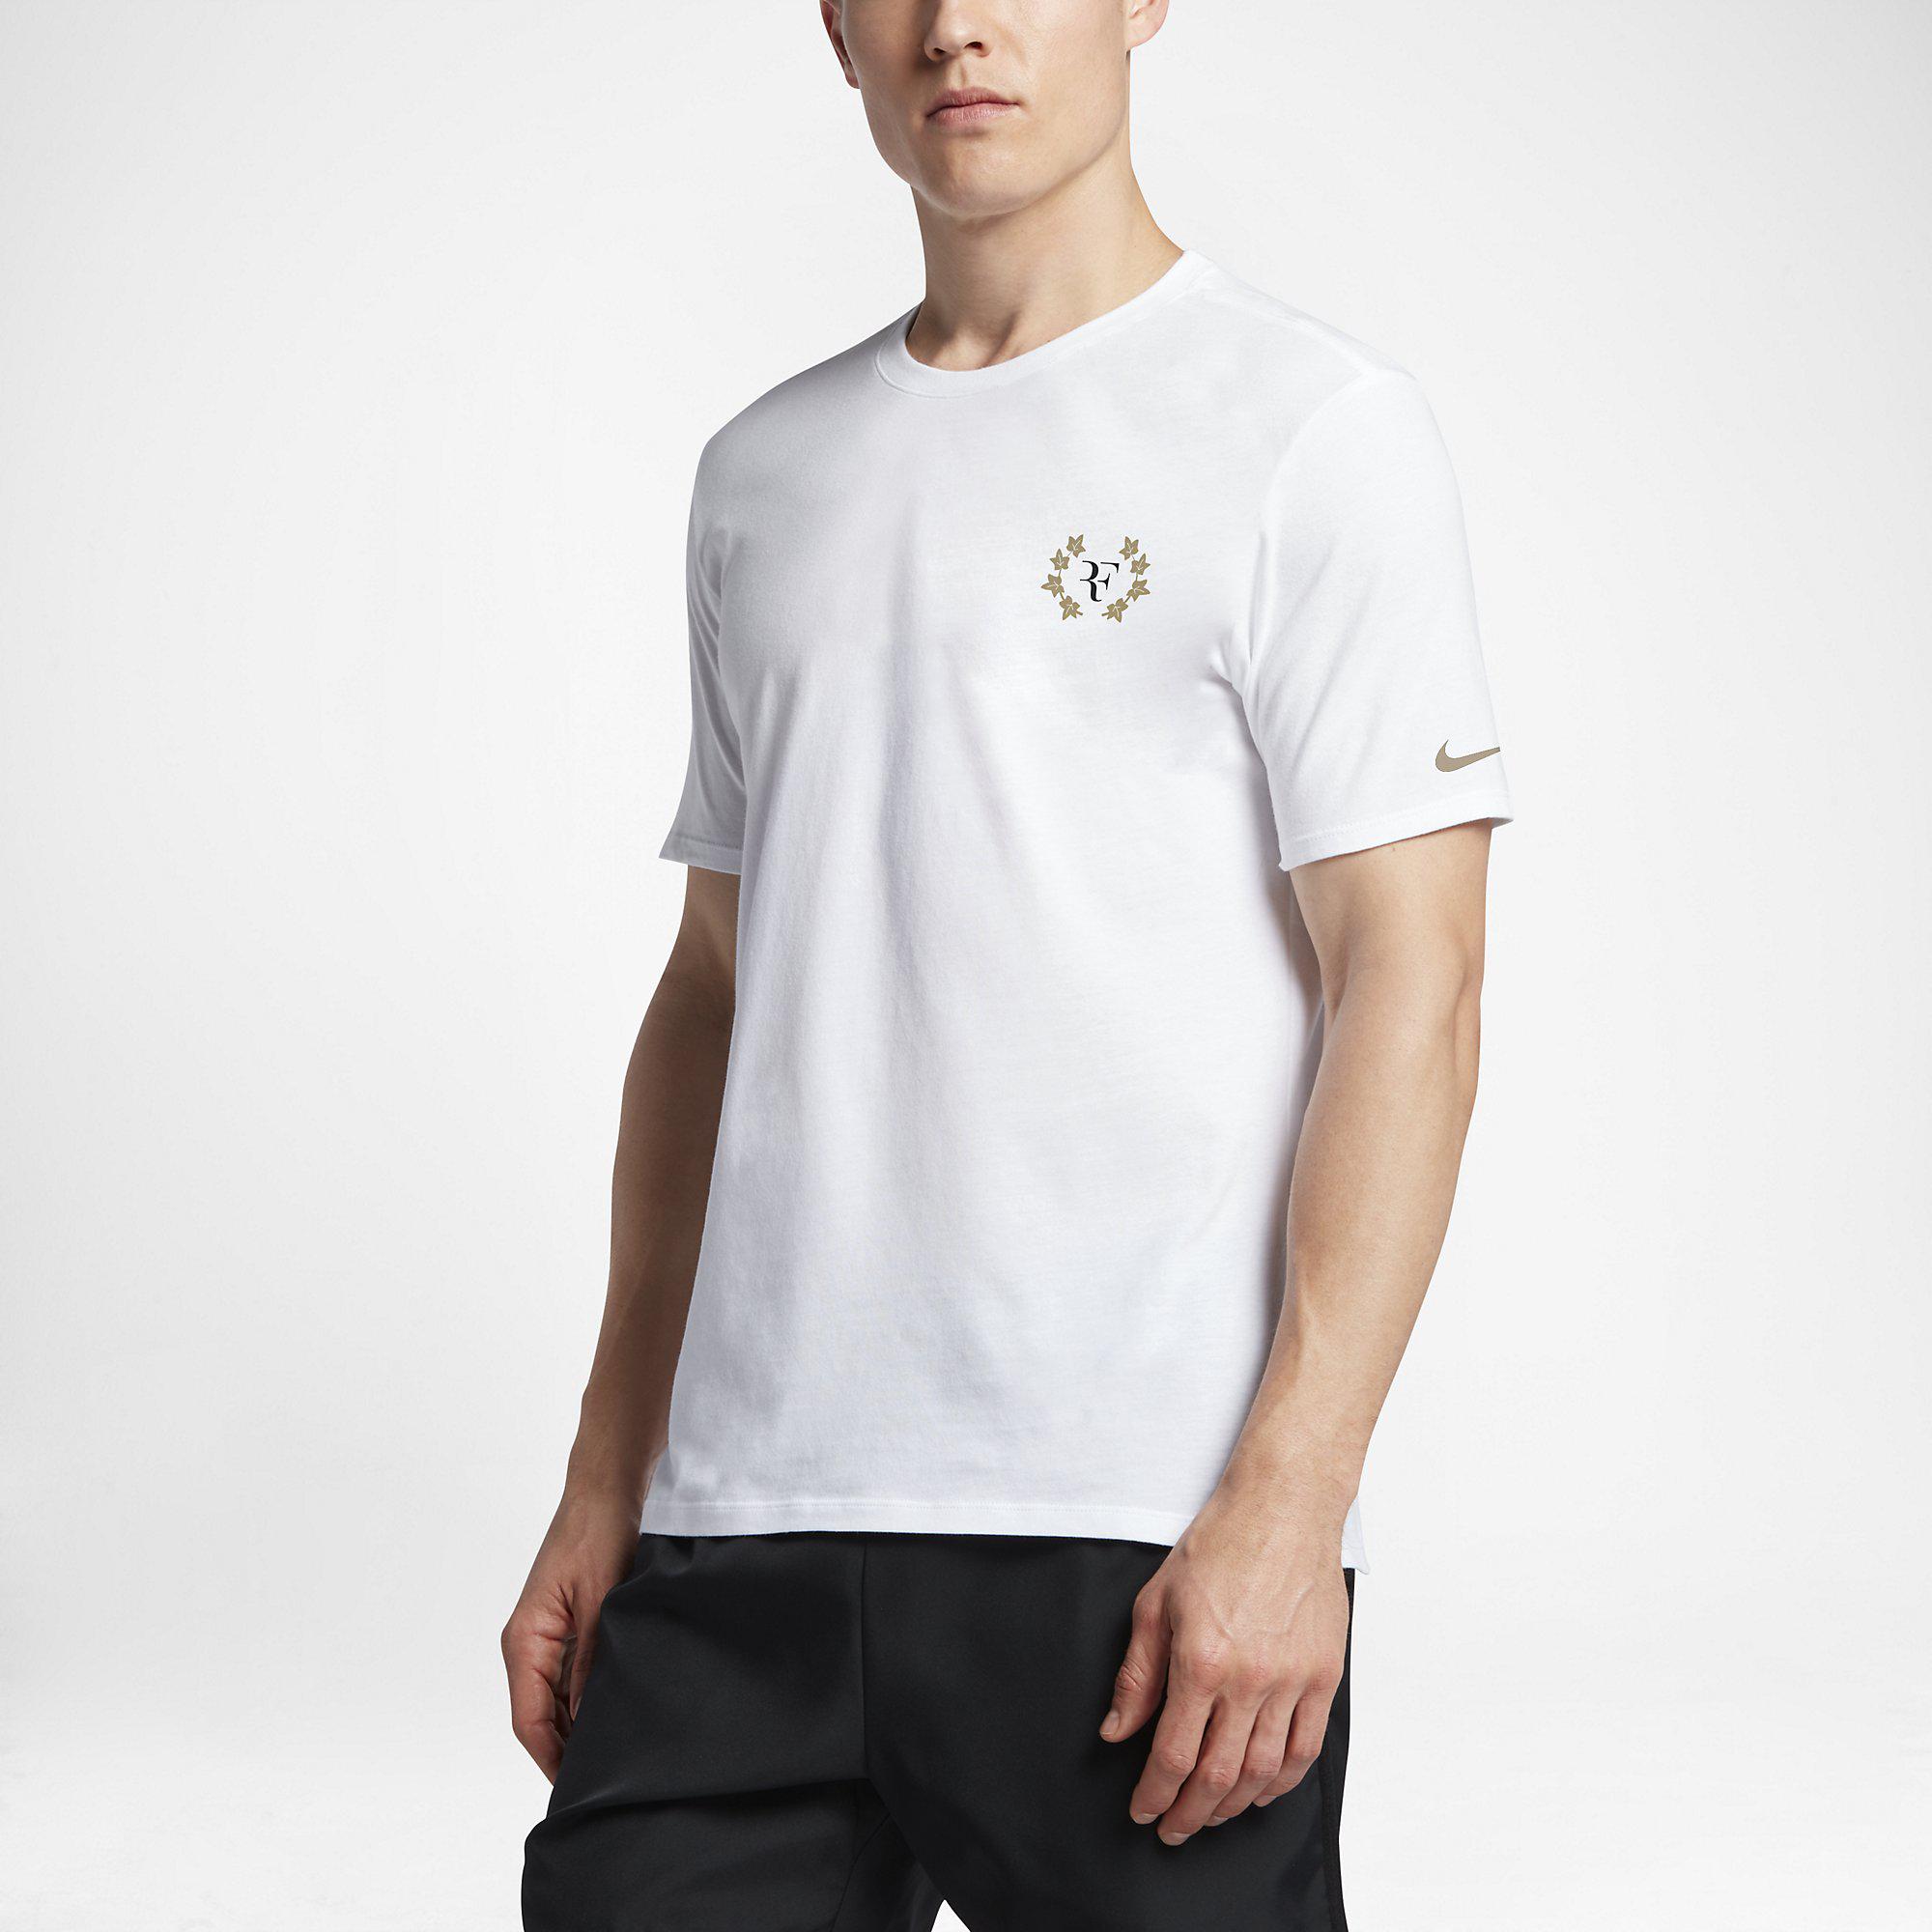 Nike Mens Federer 19 Limited Edition T-Shirt - White - Tennisnuts.com